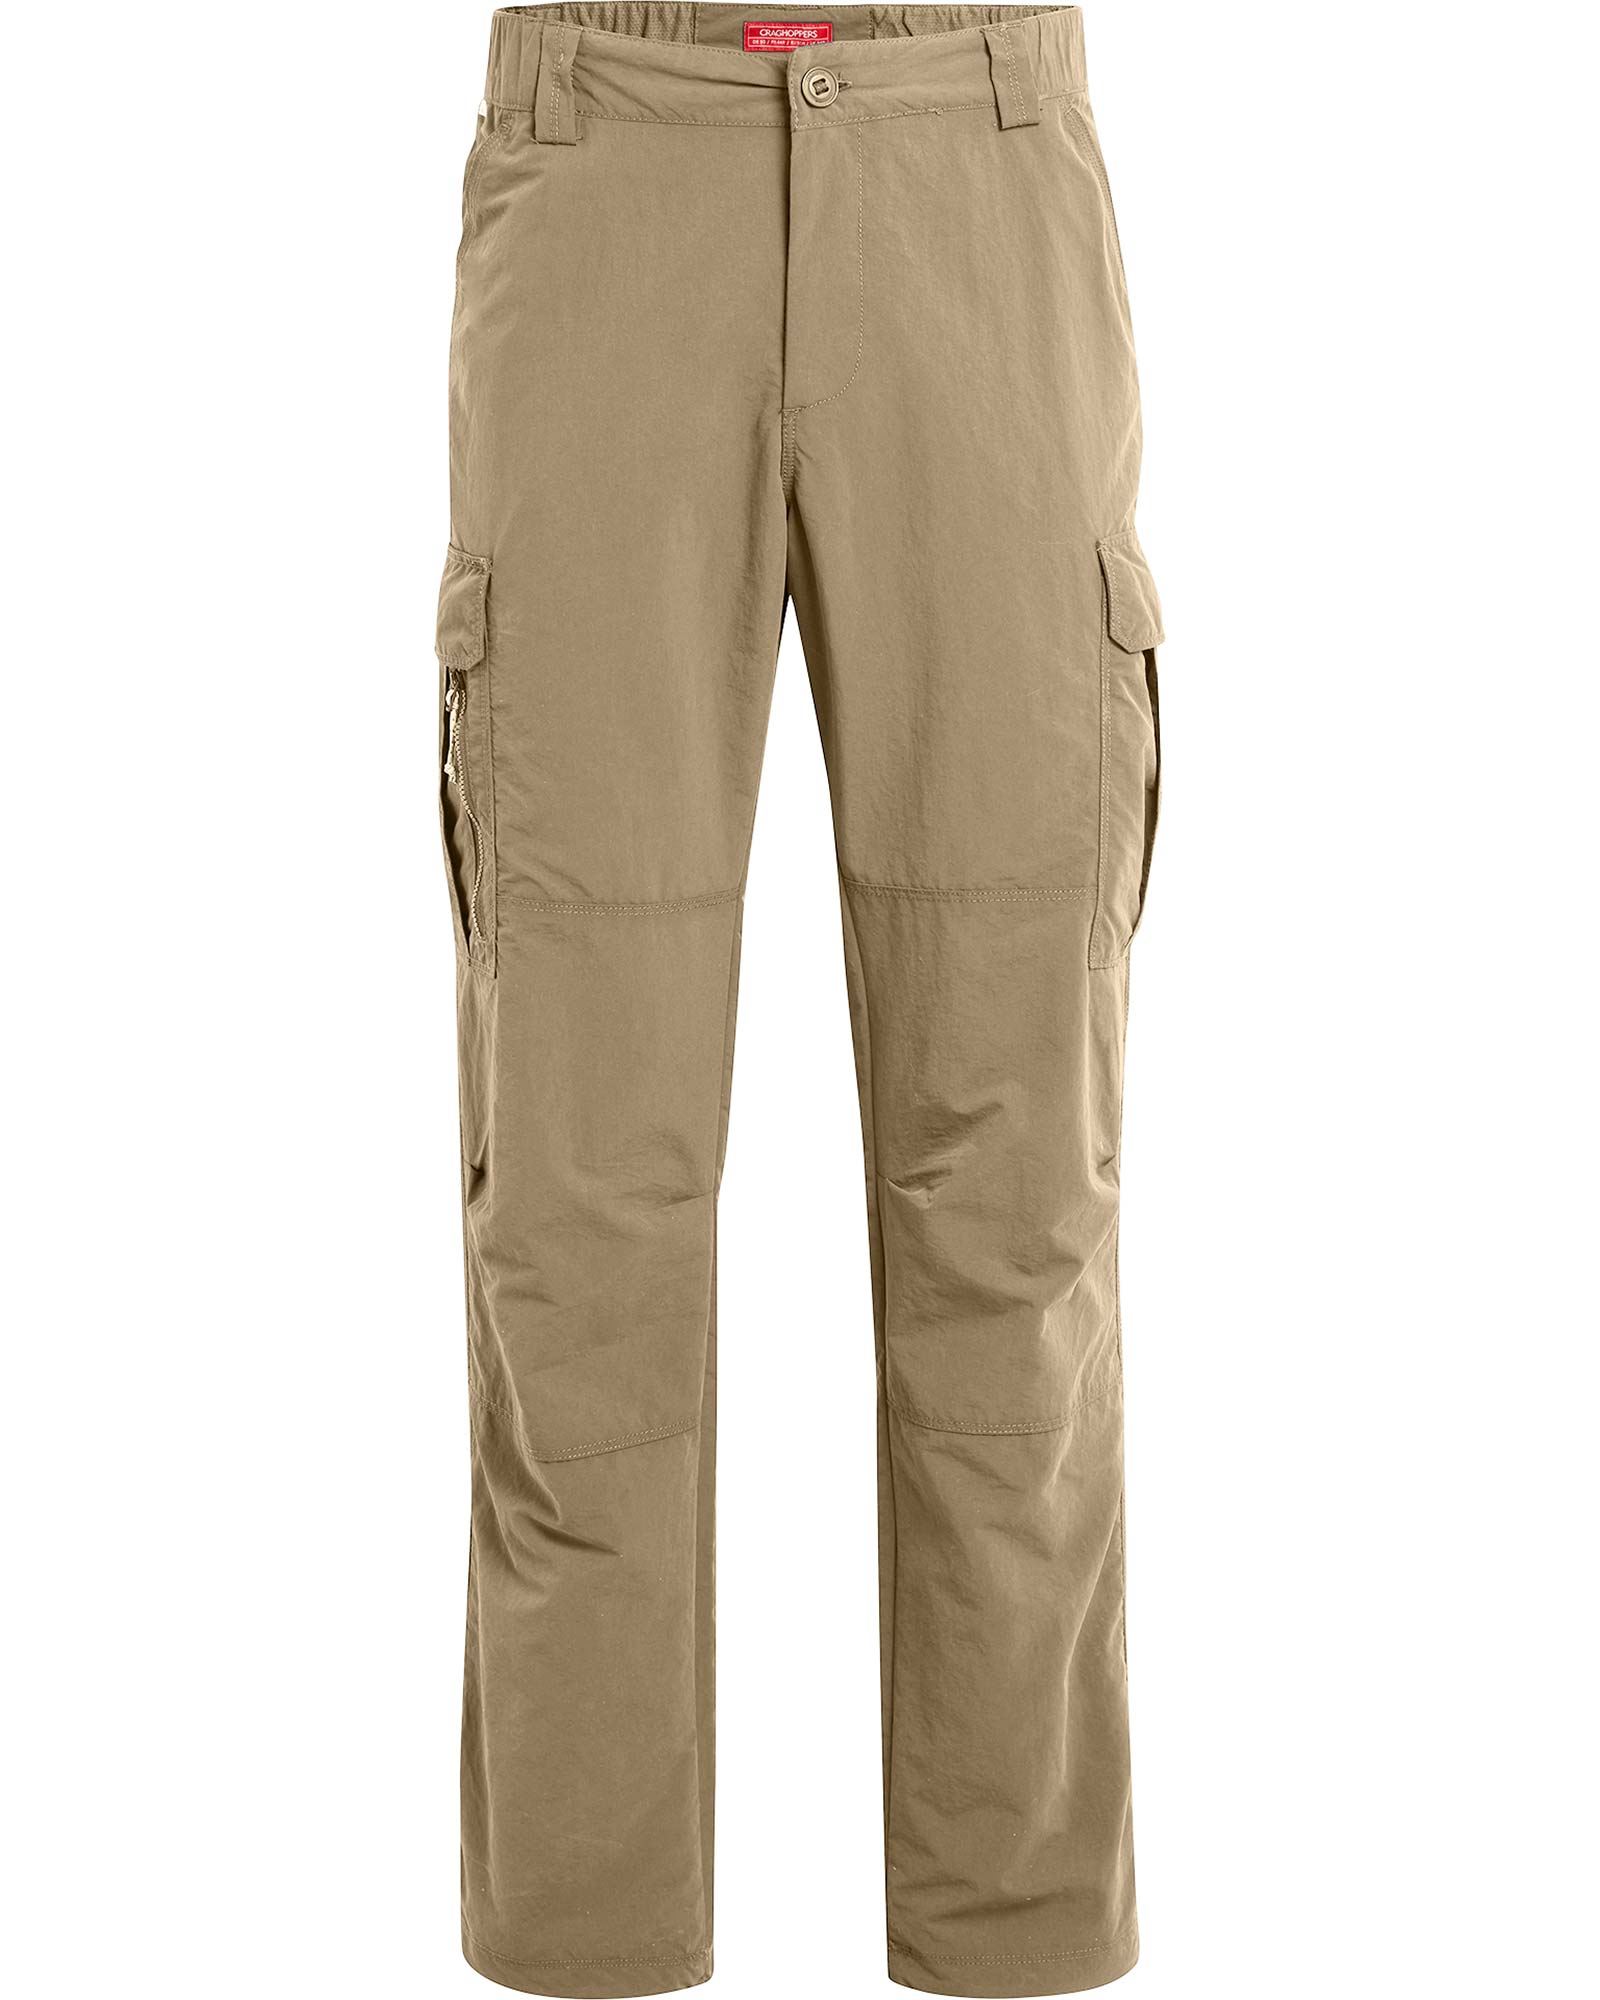 Craghoppers Men's Cargo Trousers